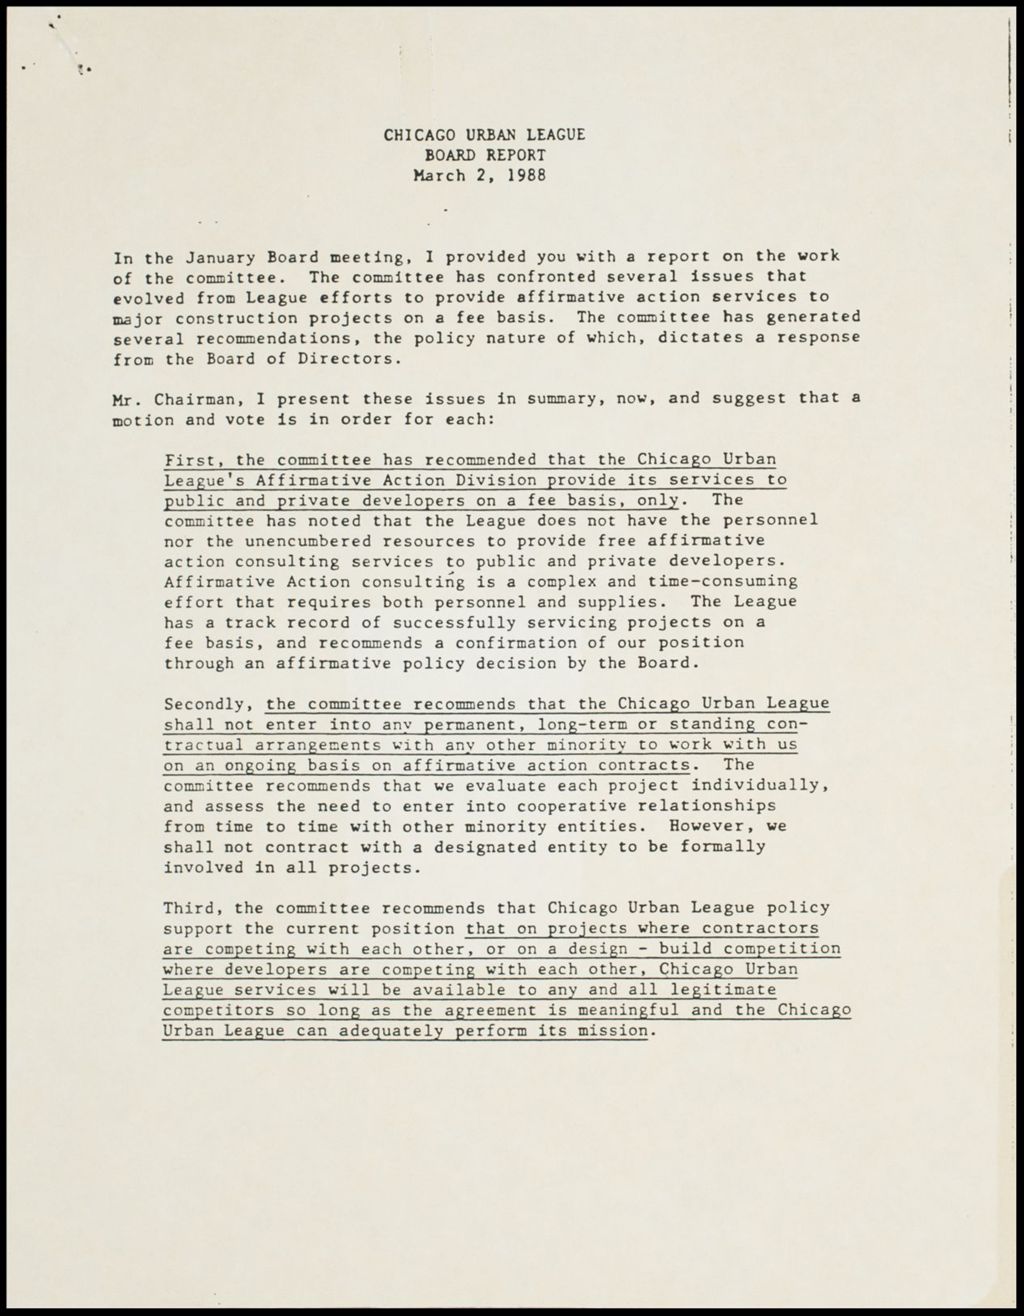 Miniature of Board meeting - affirmative action resolution, 1988 (Folder I-387)